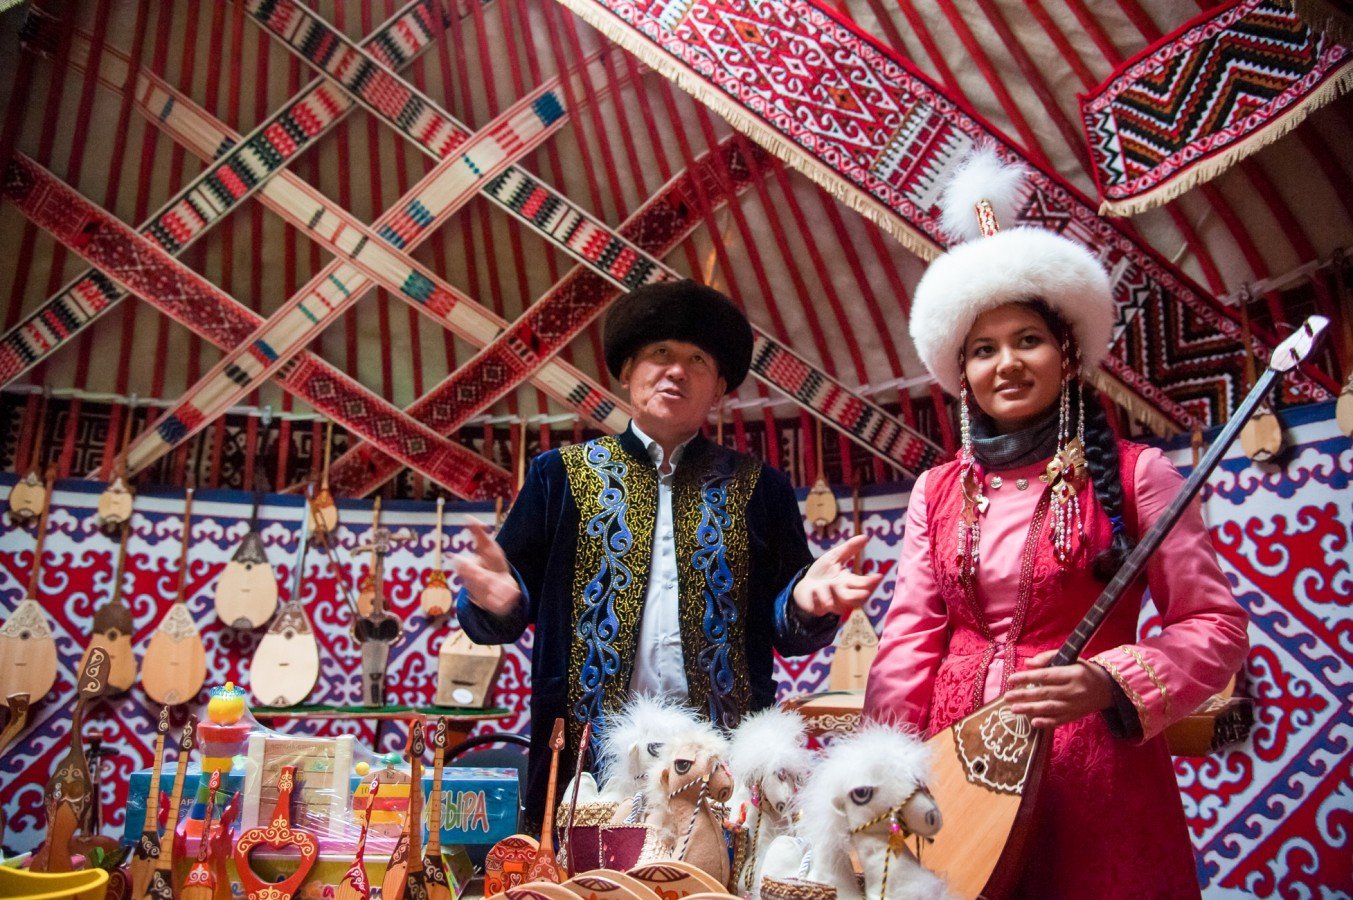 Kazakh traditional. Казахи народ. Казахская культура. Казахстан традиции и обычаи. Национальные традиции казахов.